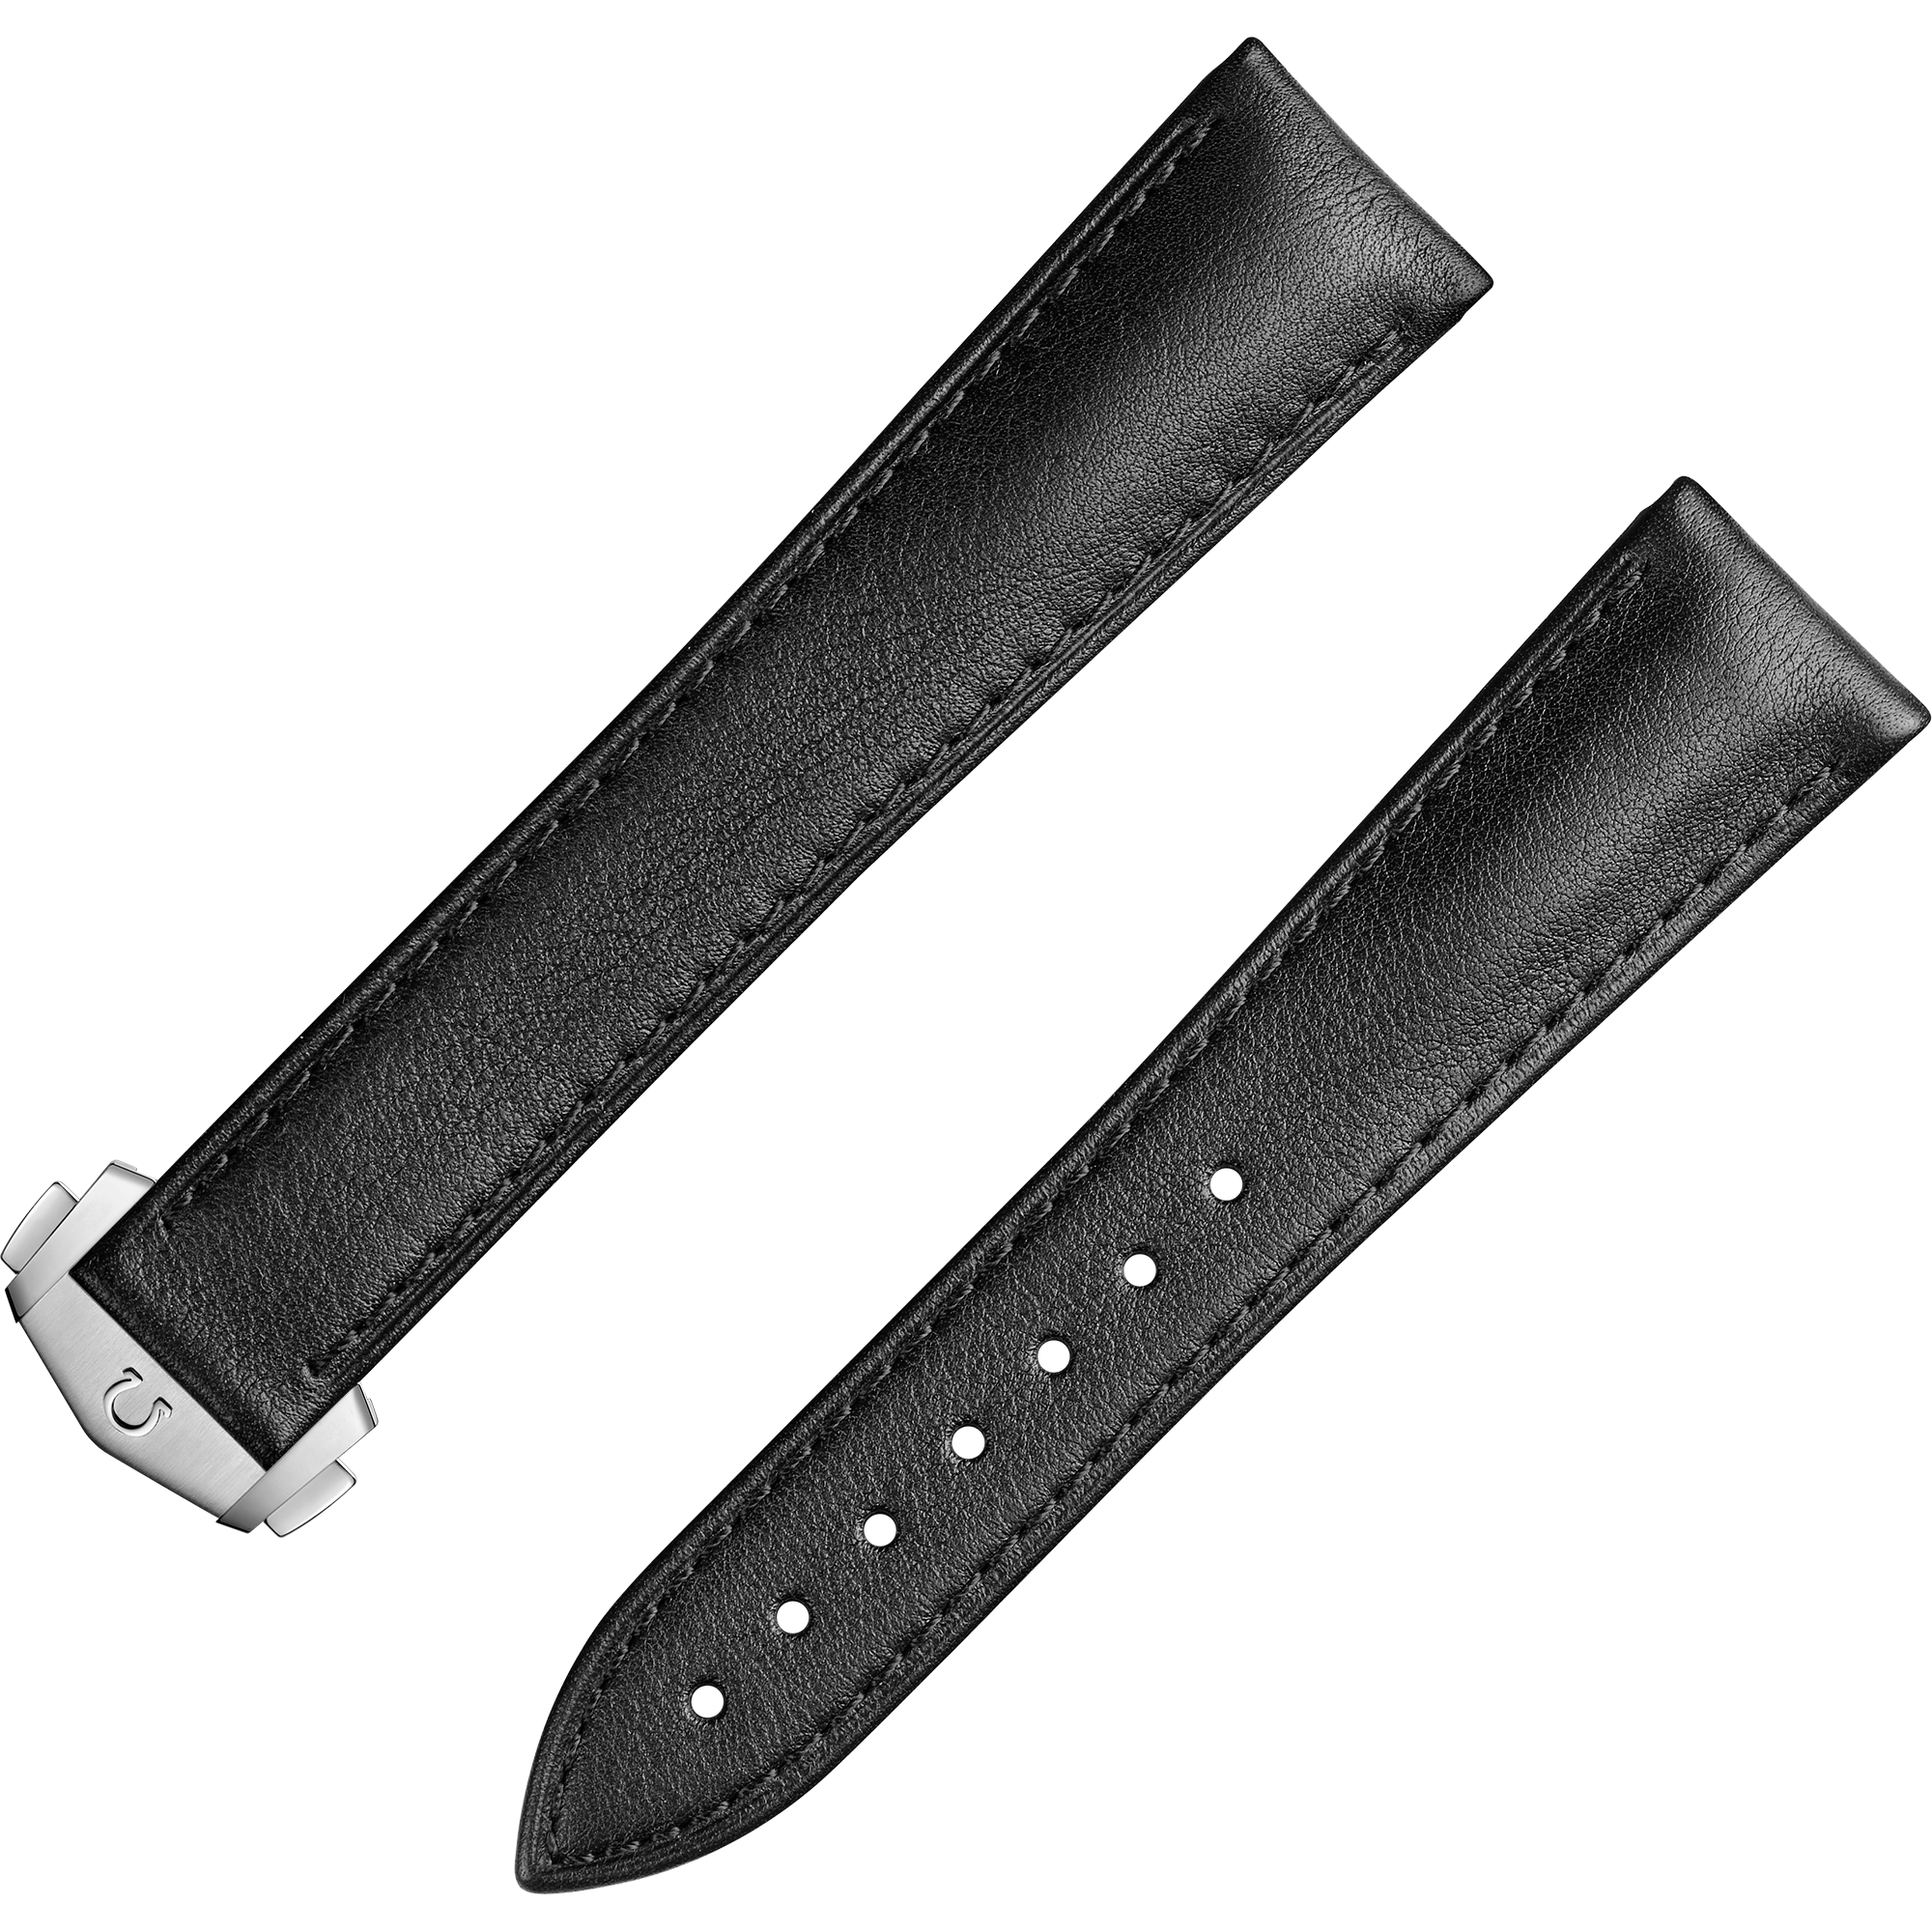 Two-piece strap - Speedmaster Moonwatch black leather strap with foldover clasp - 032CUZ014116W